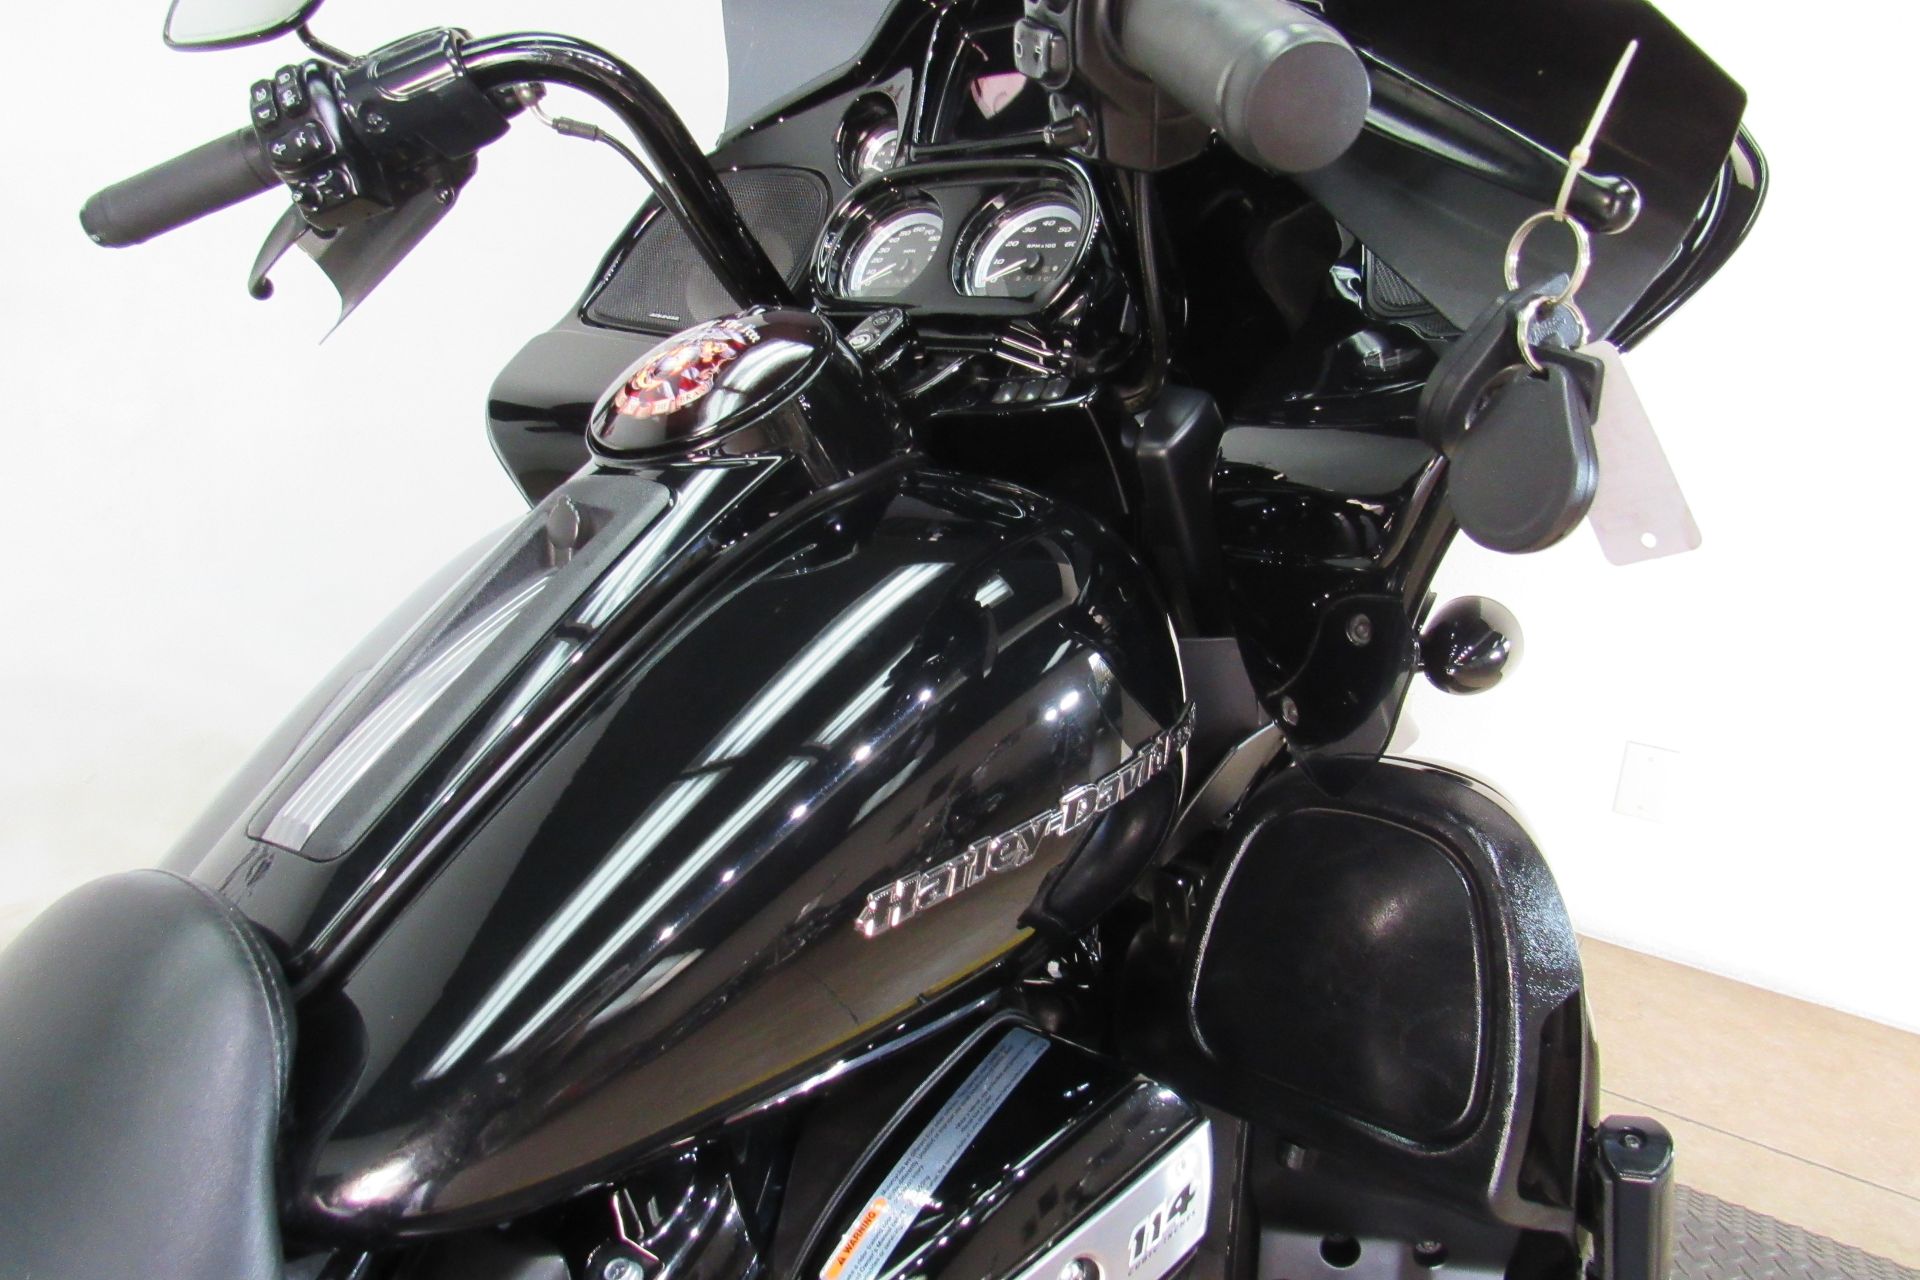 2020 Harley-Davidson Road Glide® Limited in Temecula, California - Photo 26